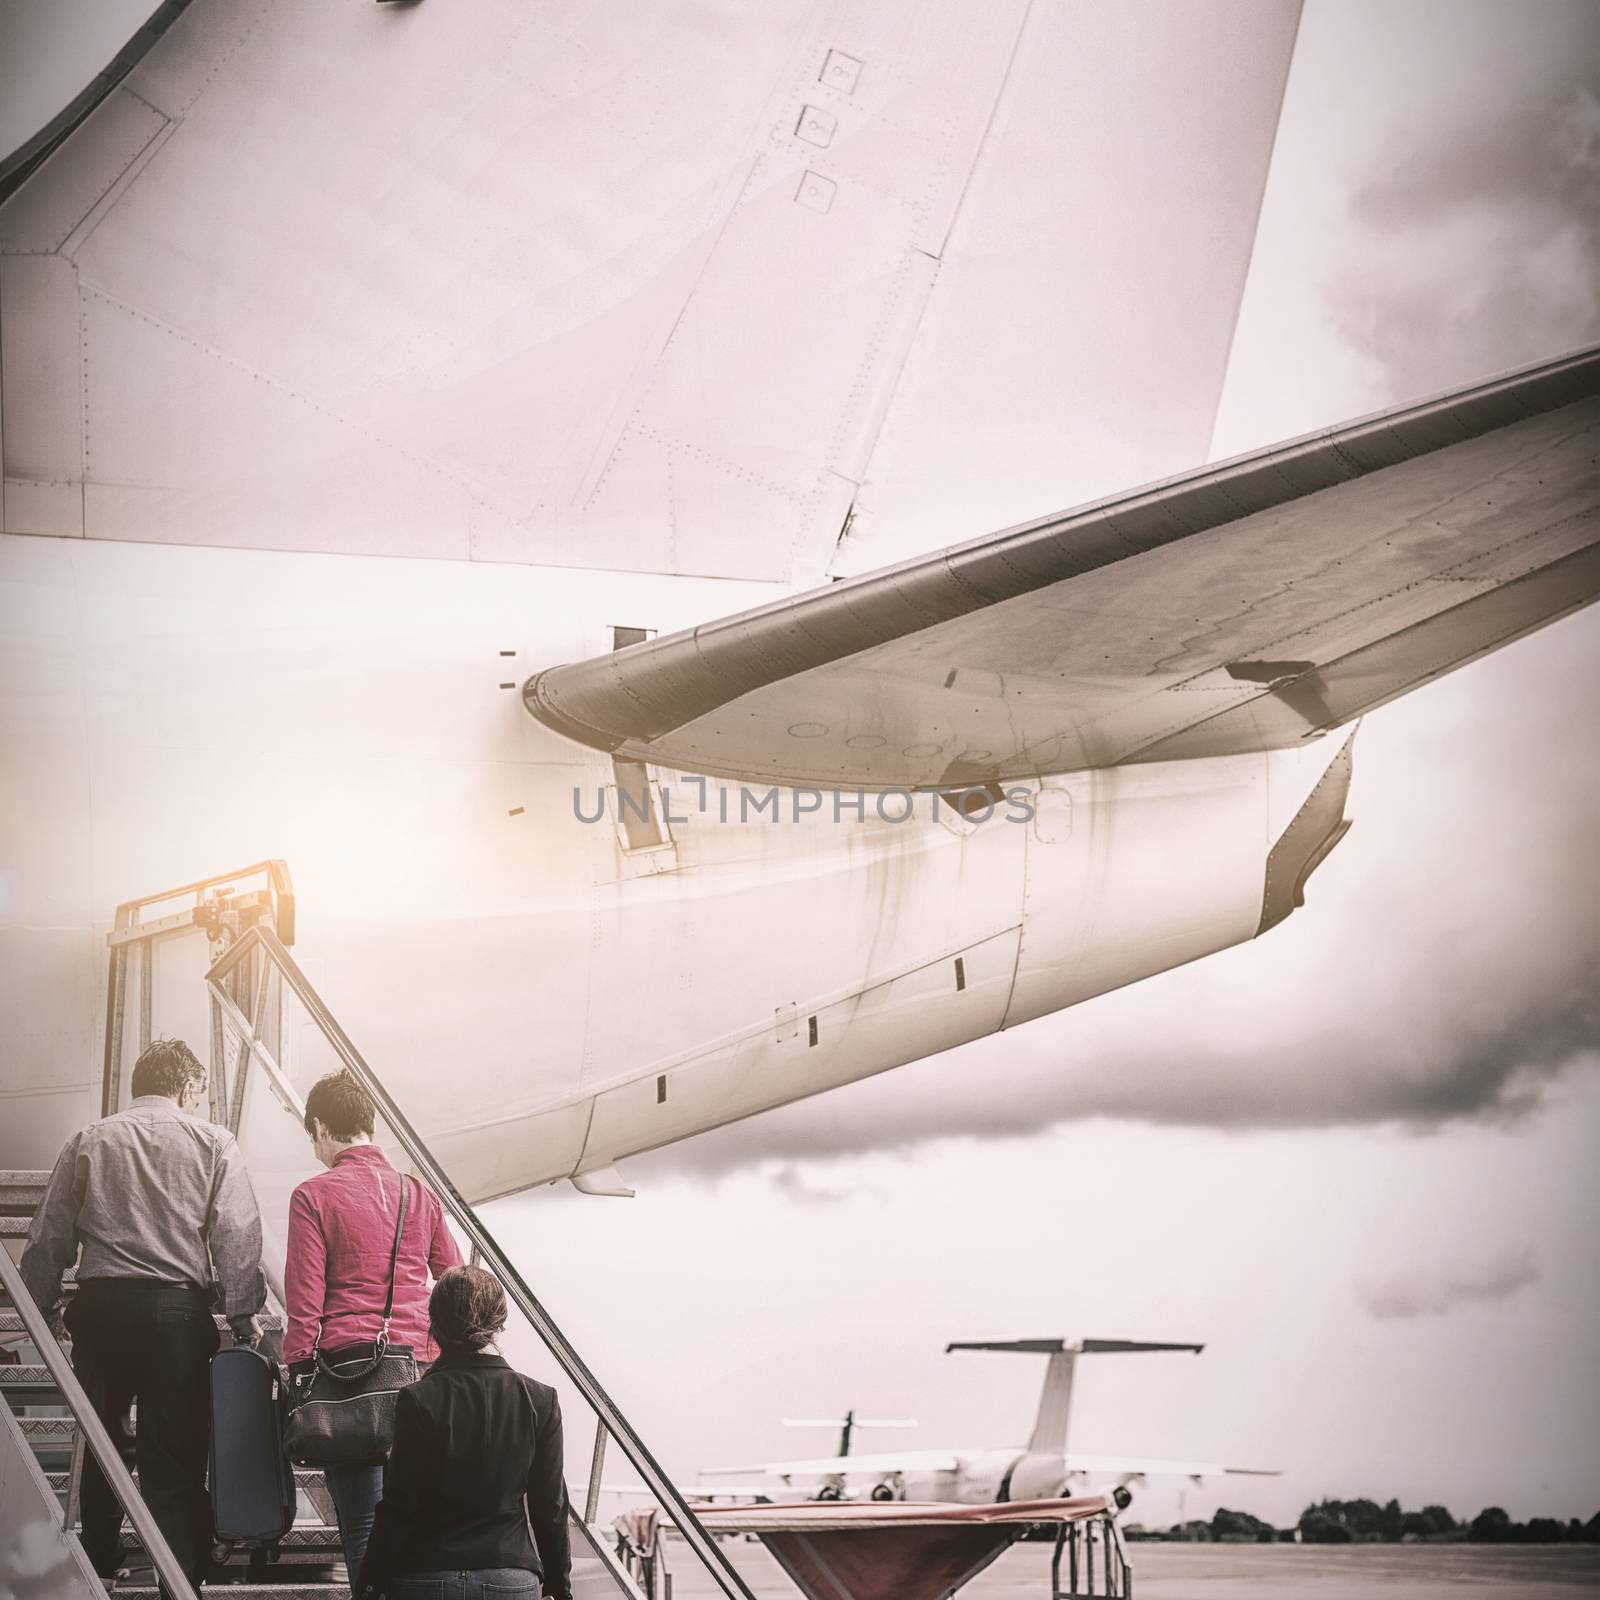 Rear view of people boarding in airplane at runway